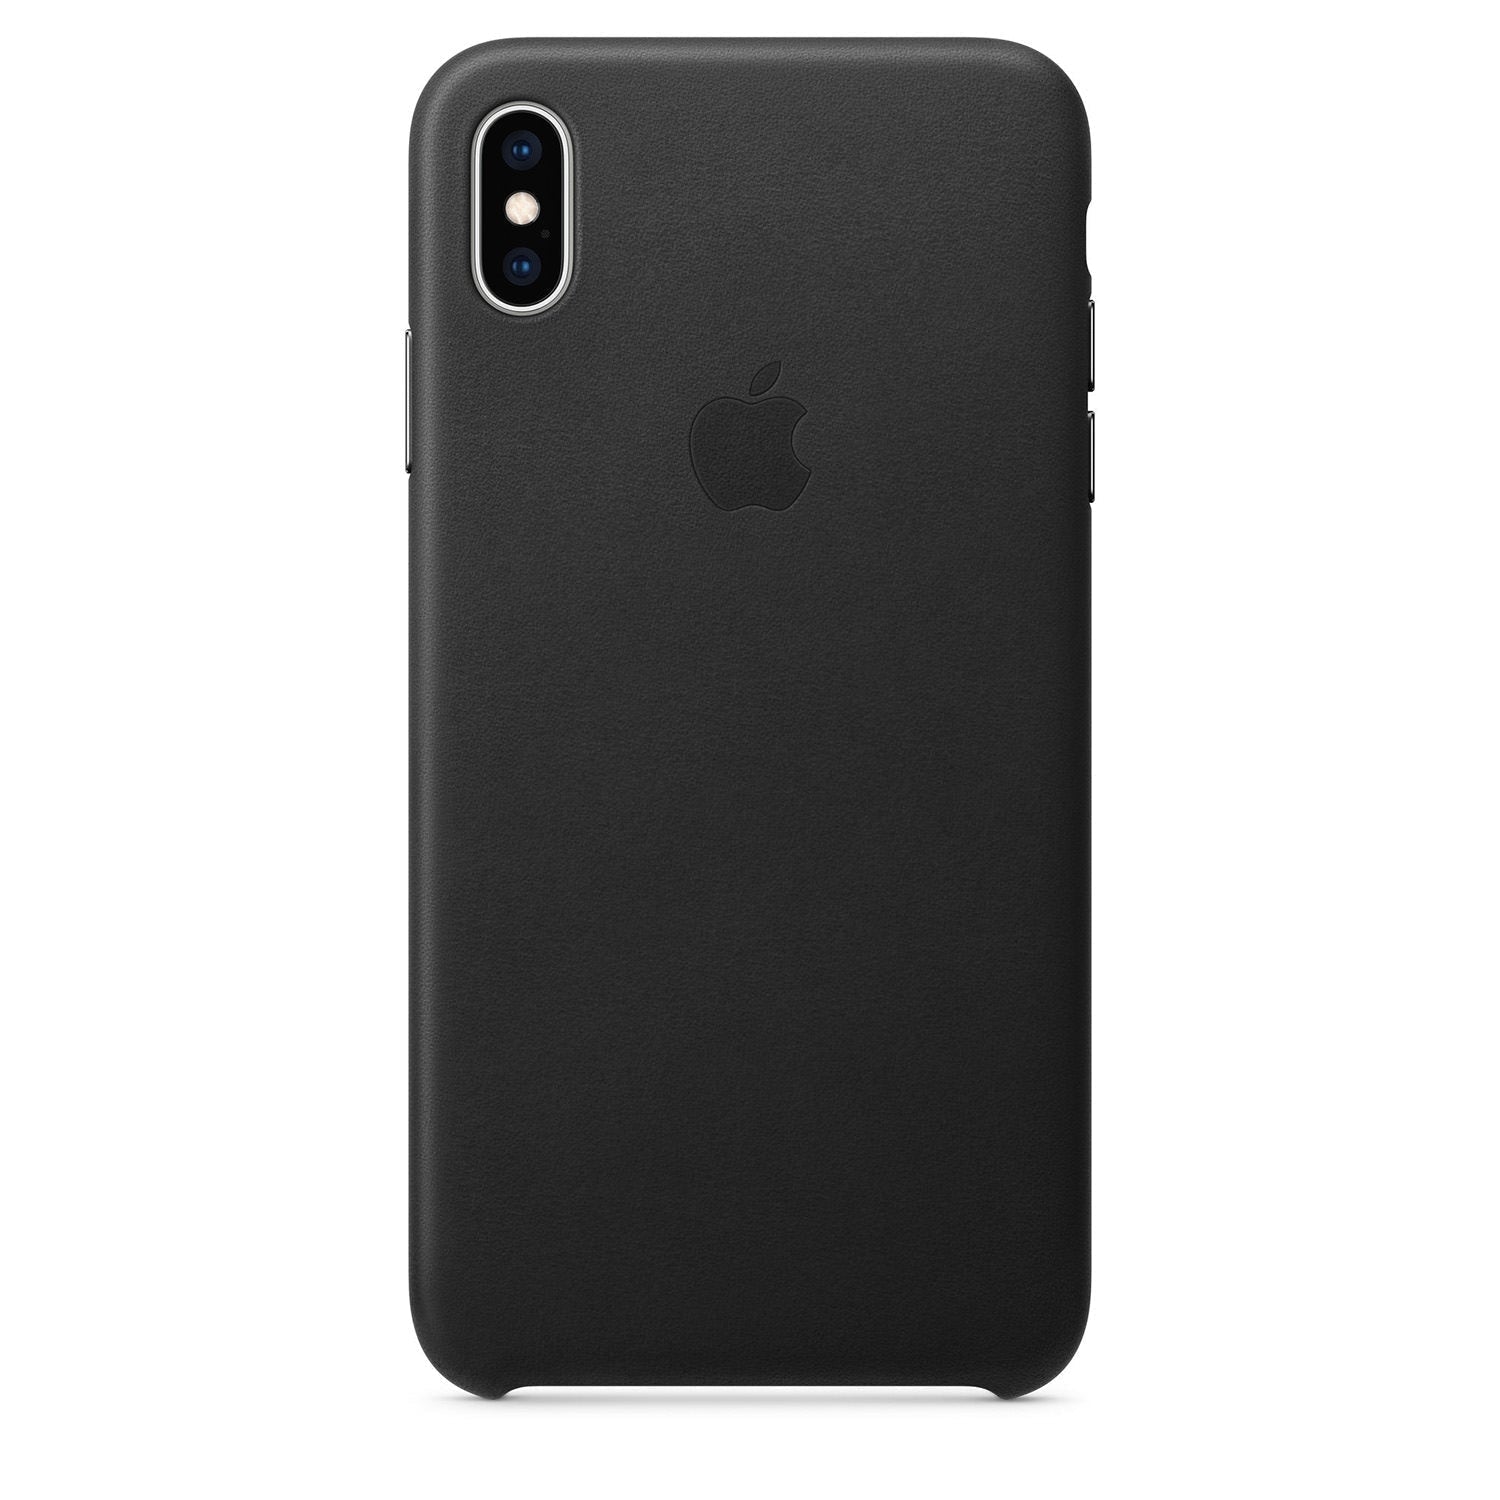 Husa Piele Naturala Apple pt. iPhone XS Max Black - MRWT2ZM/A Originala - 190198763464 - 1